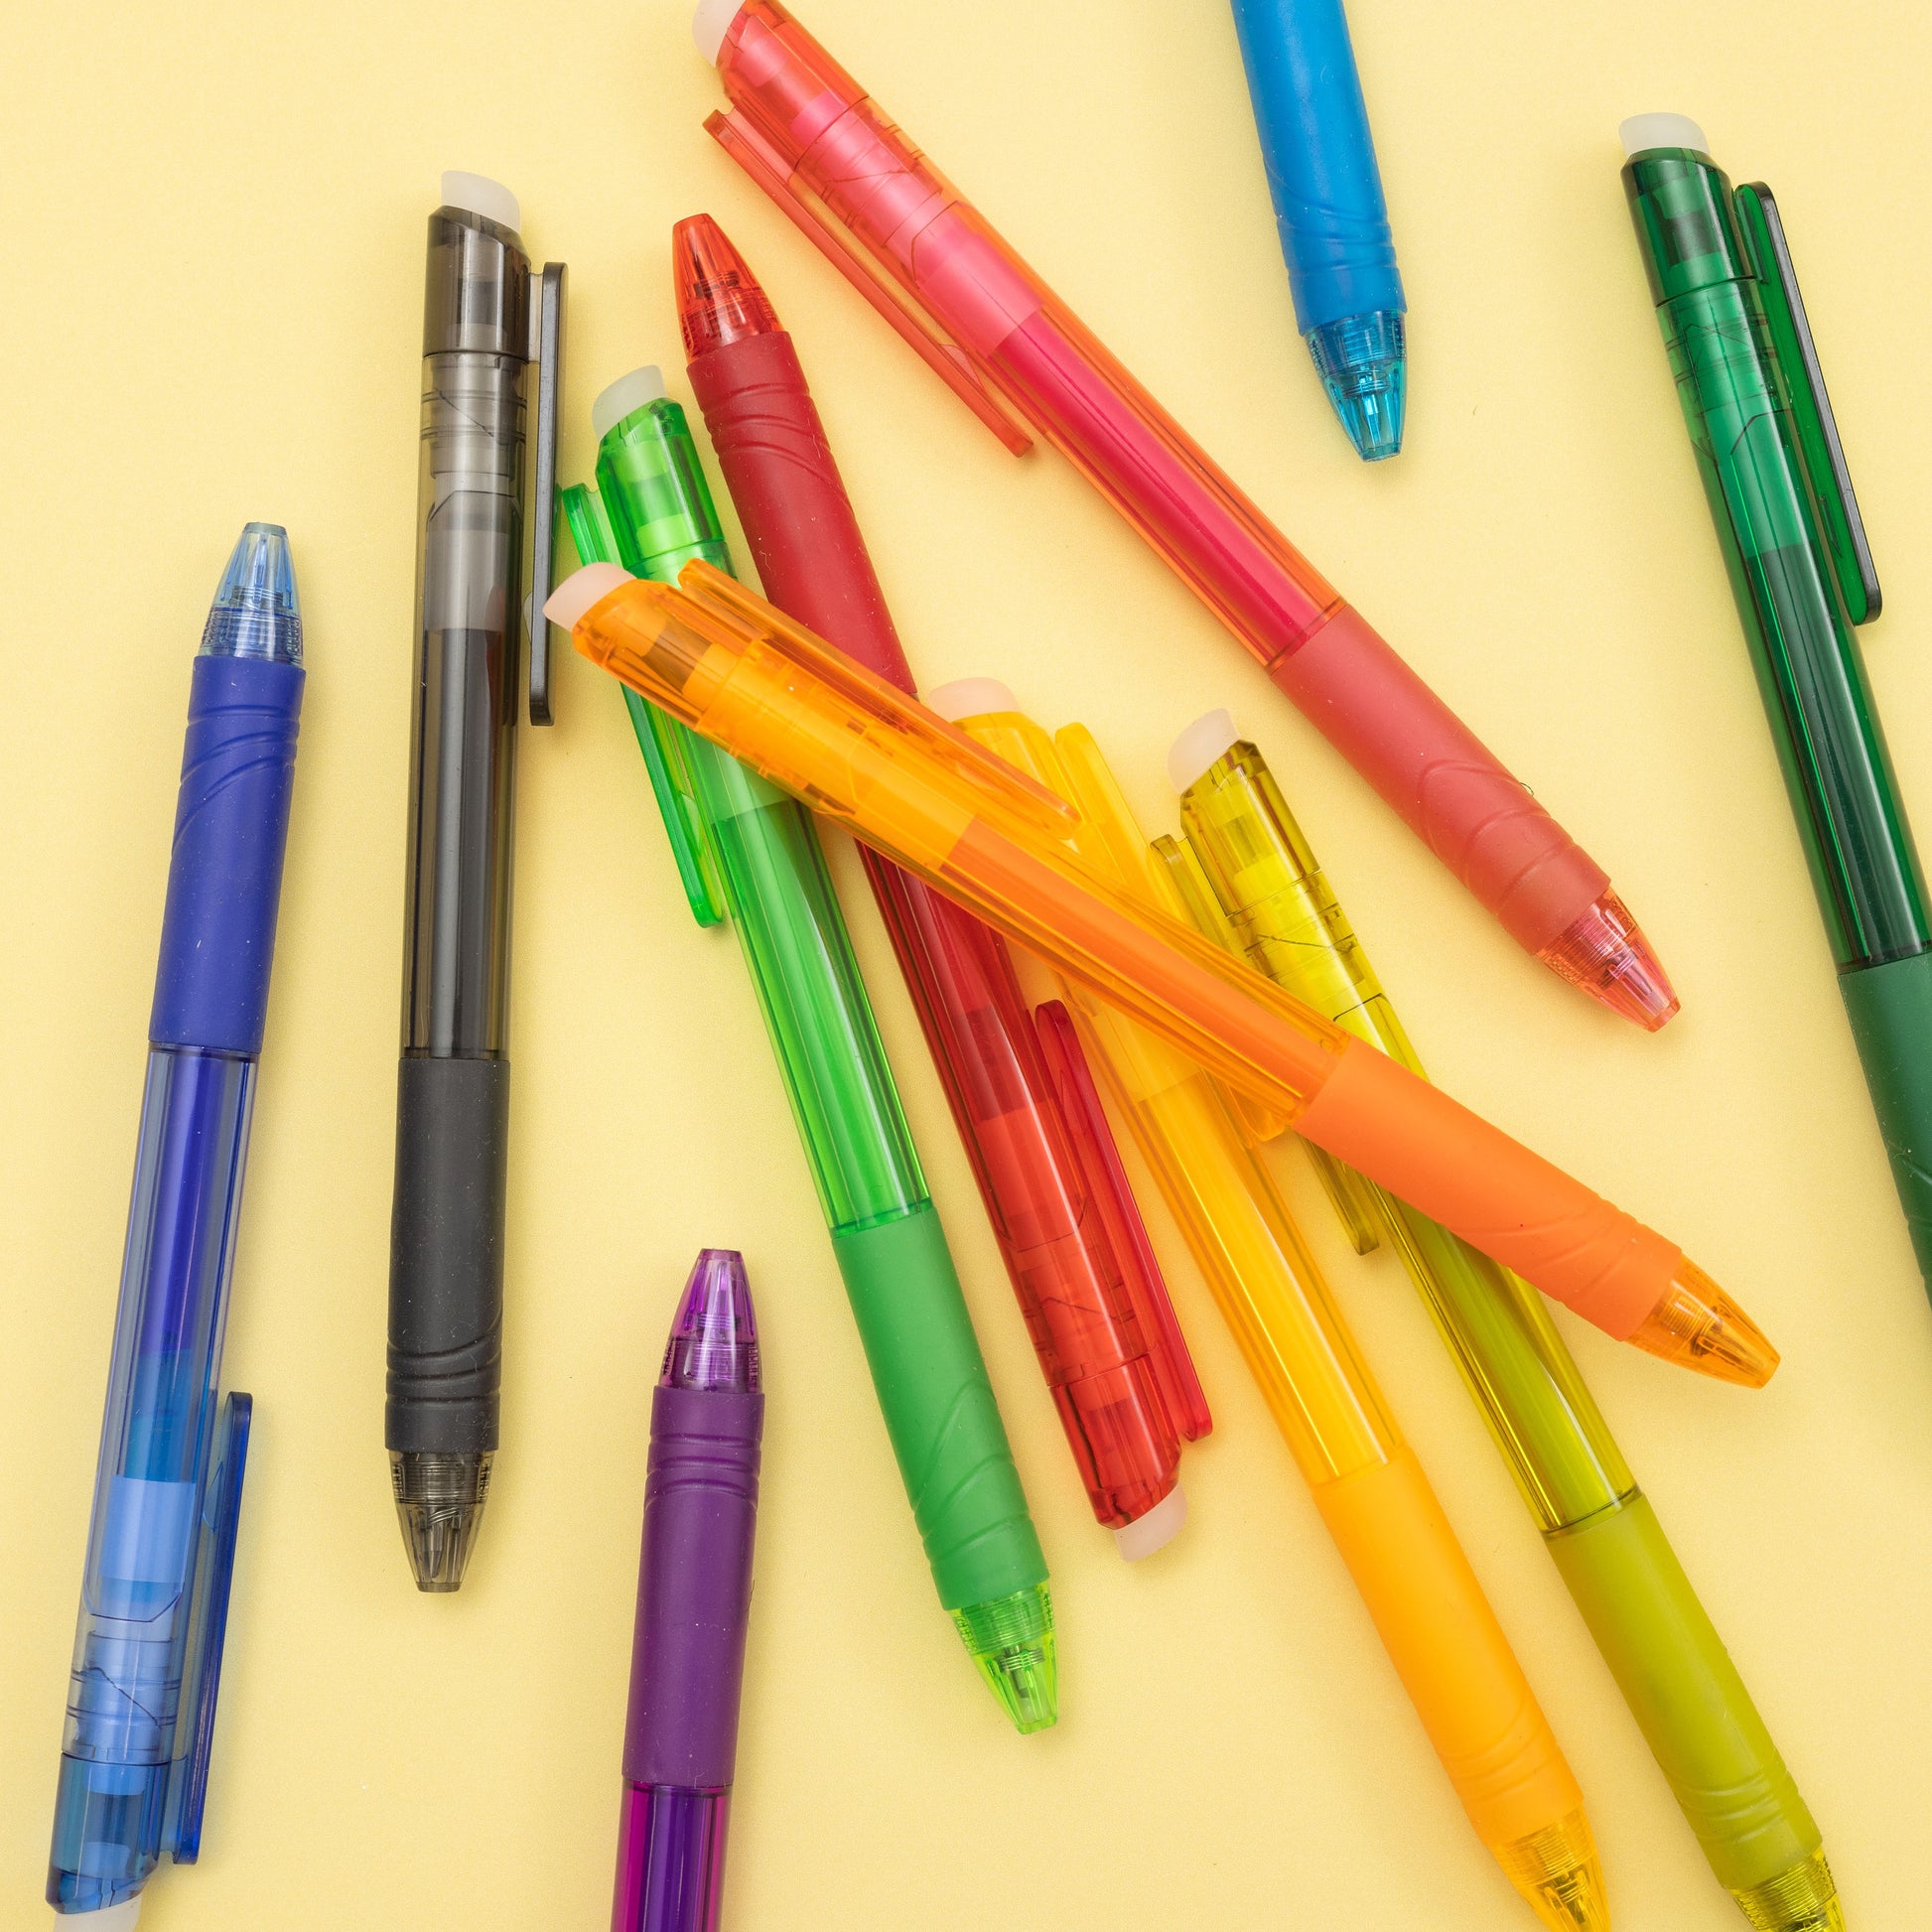 Colored Erasable Gel Pens - Set of 12